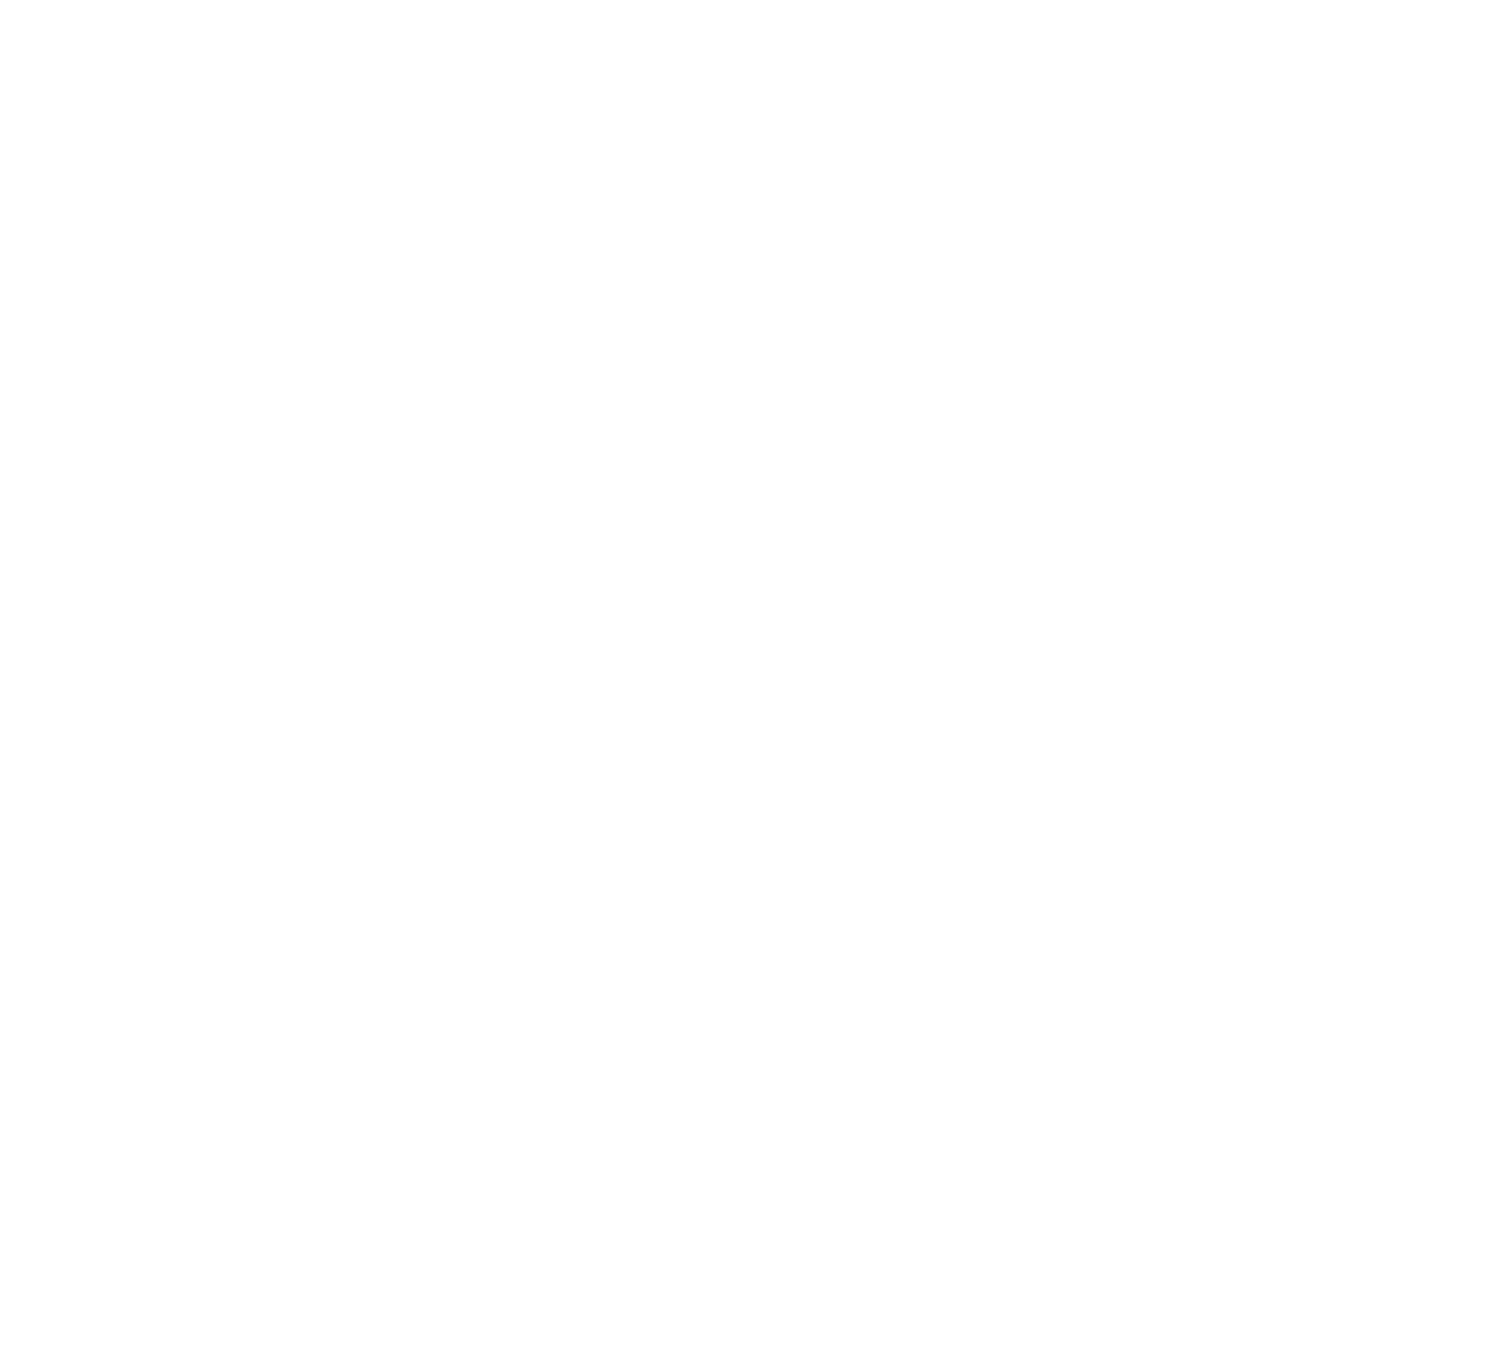 Five Islands Hotel